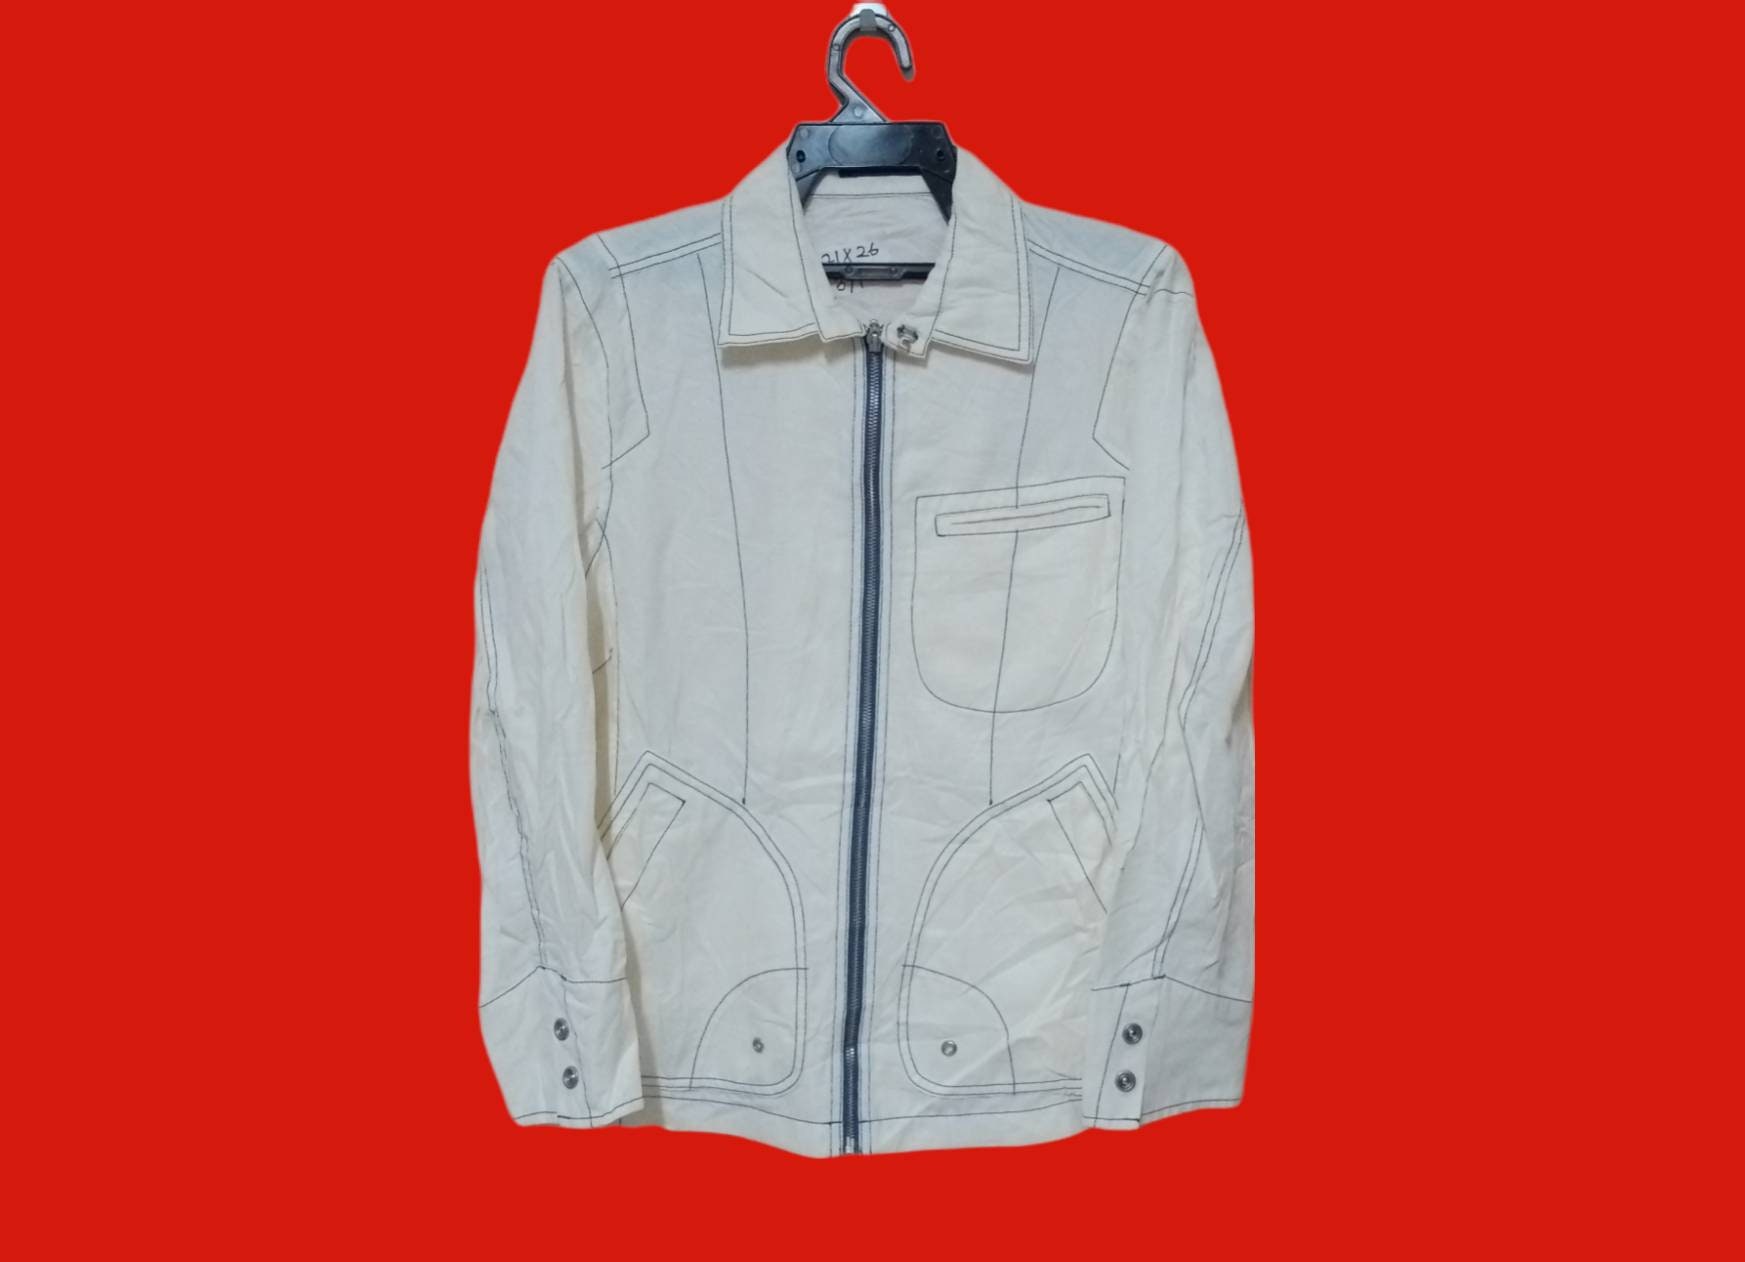 Vintage Crocodile Coach Jacket, Men's Fashion, Coats, Jackets and